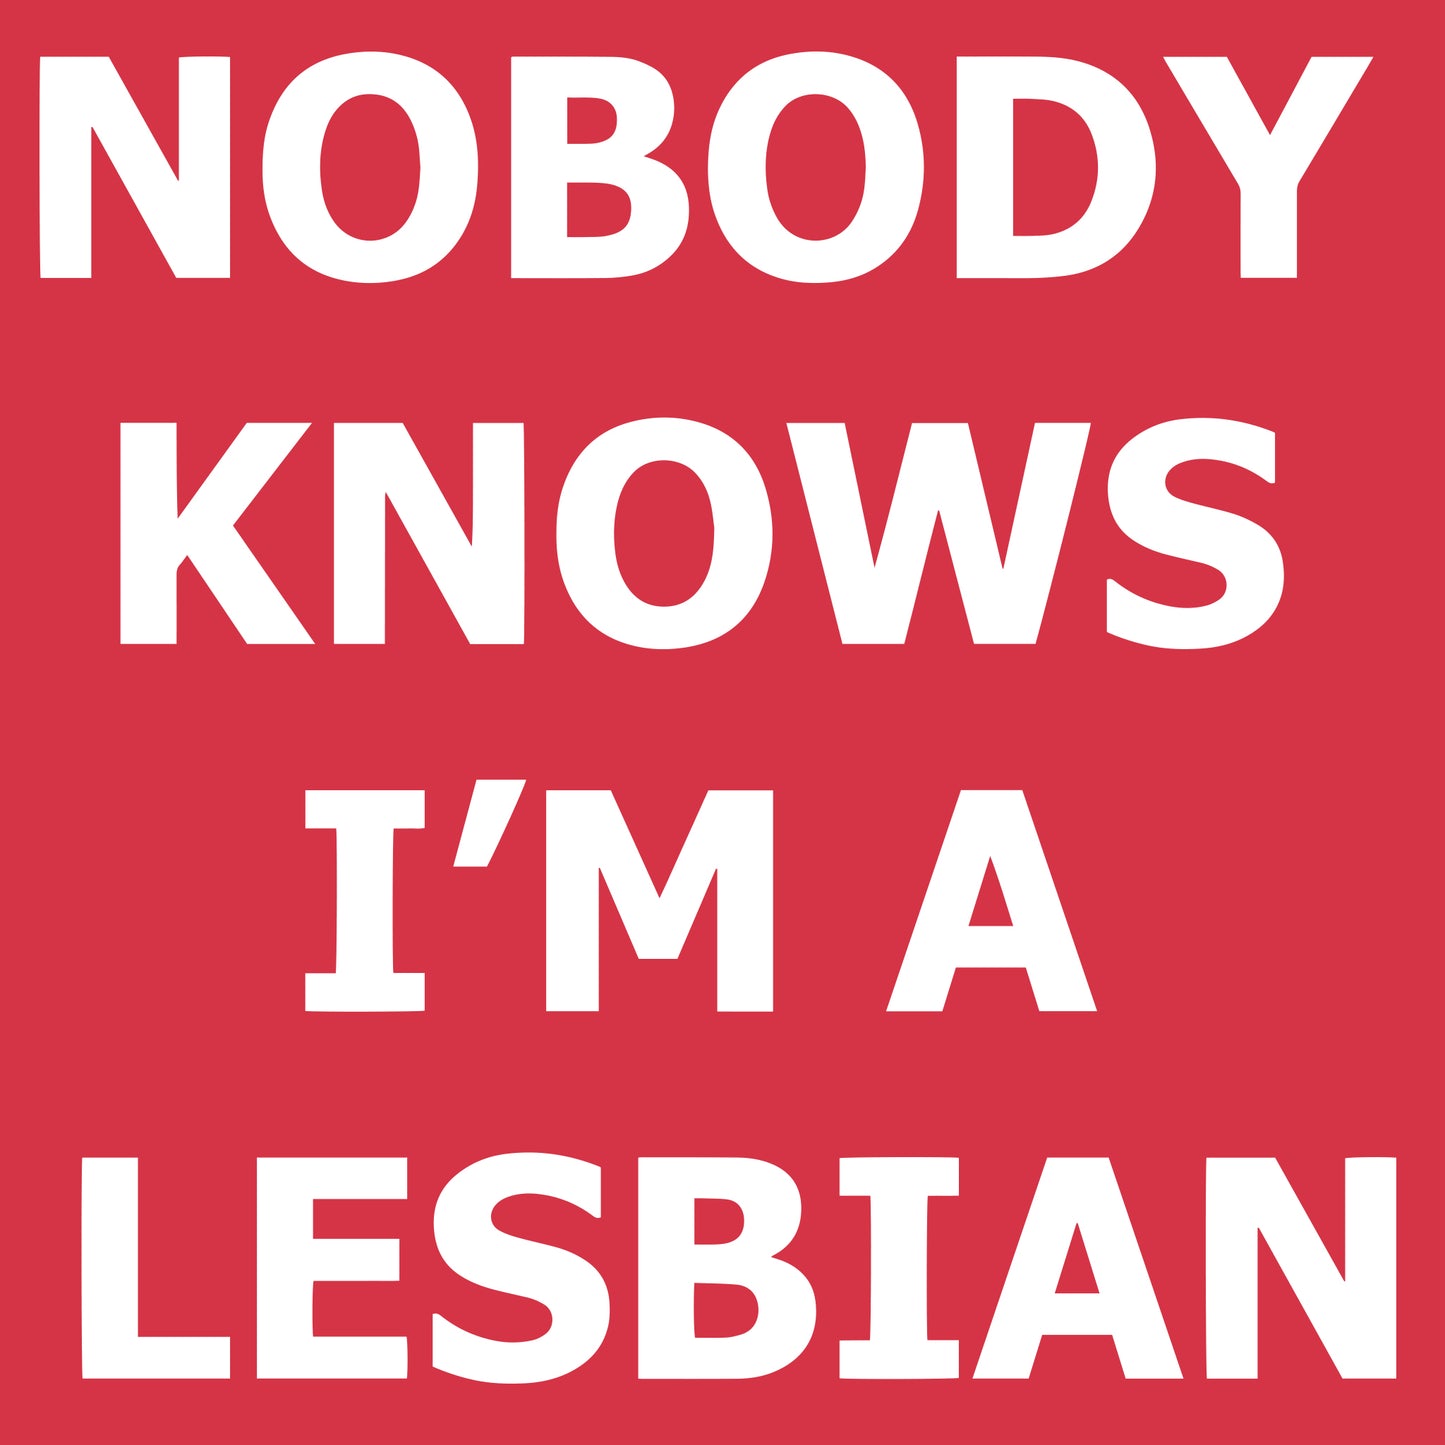 Nobody Knows I'm a Lesbian